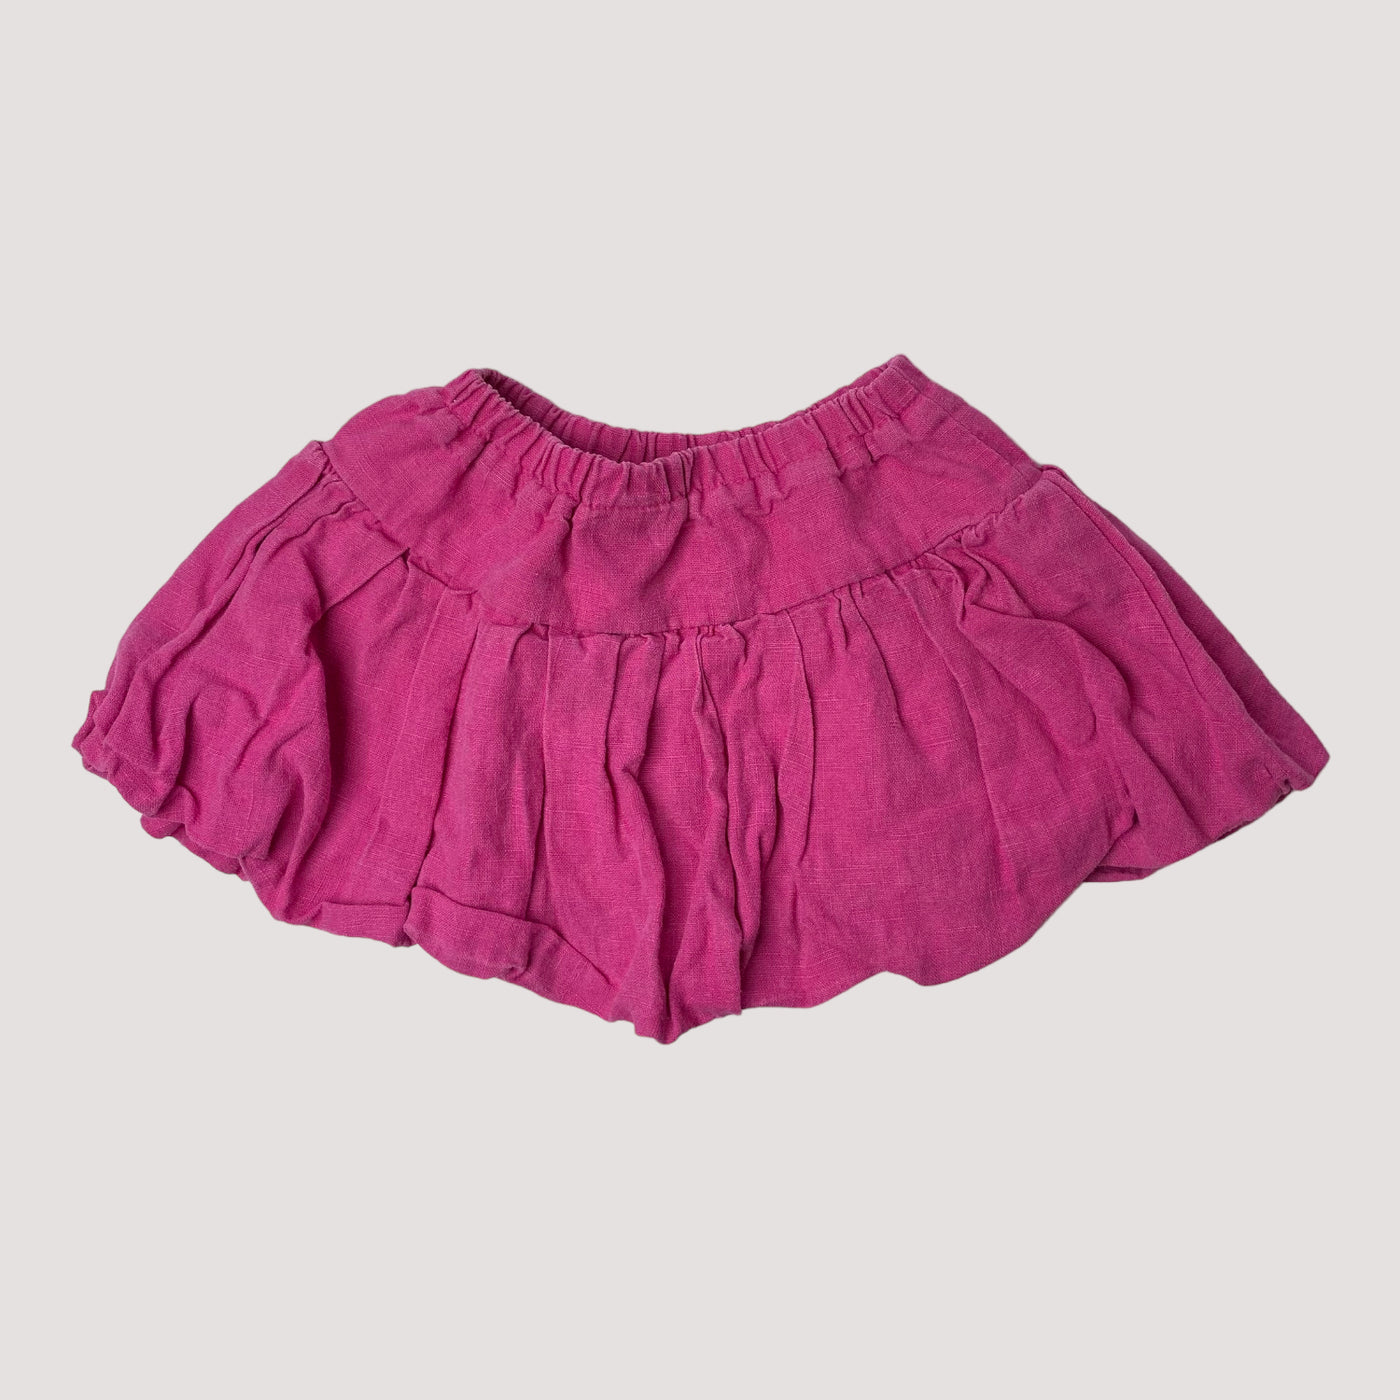 Metsola woven skirt, pink | 98/104cm